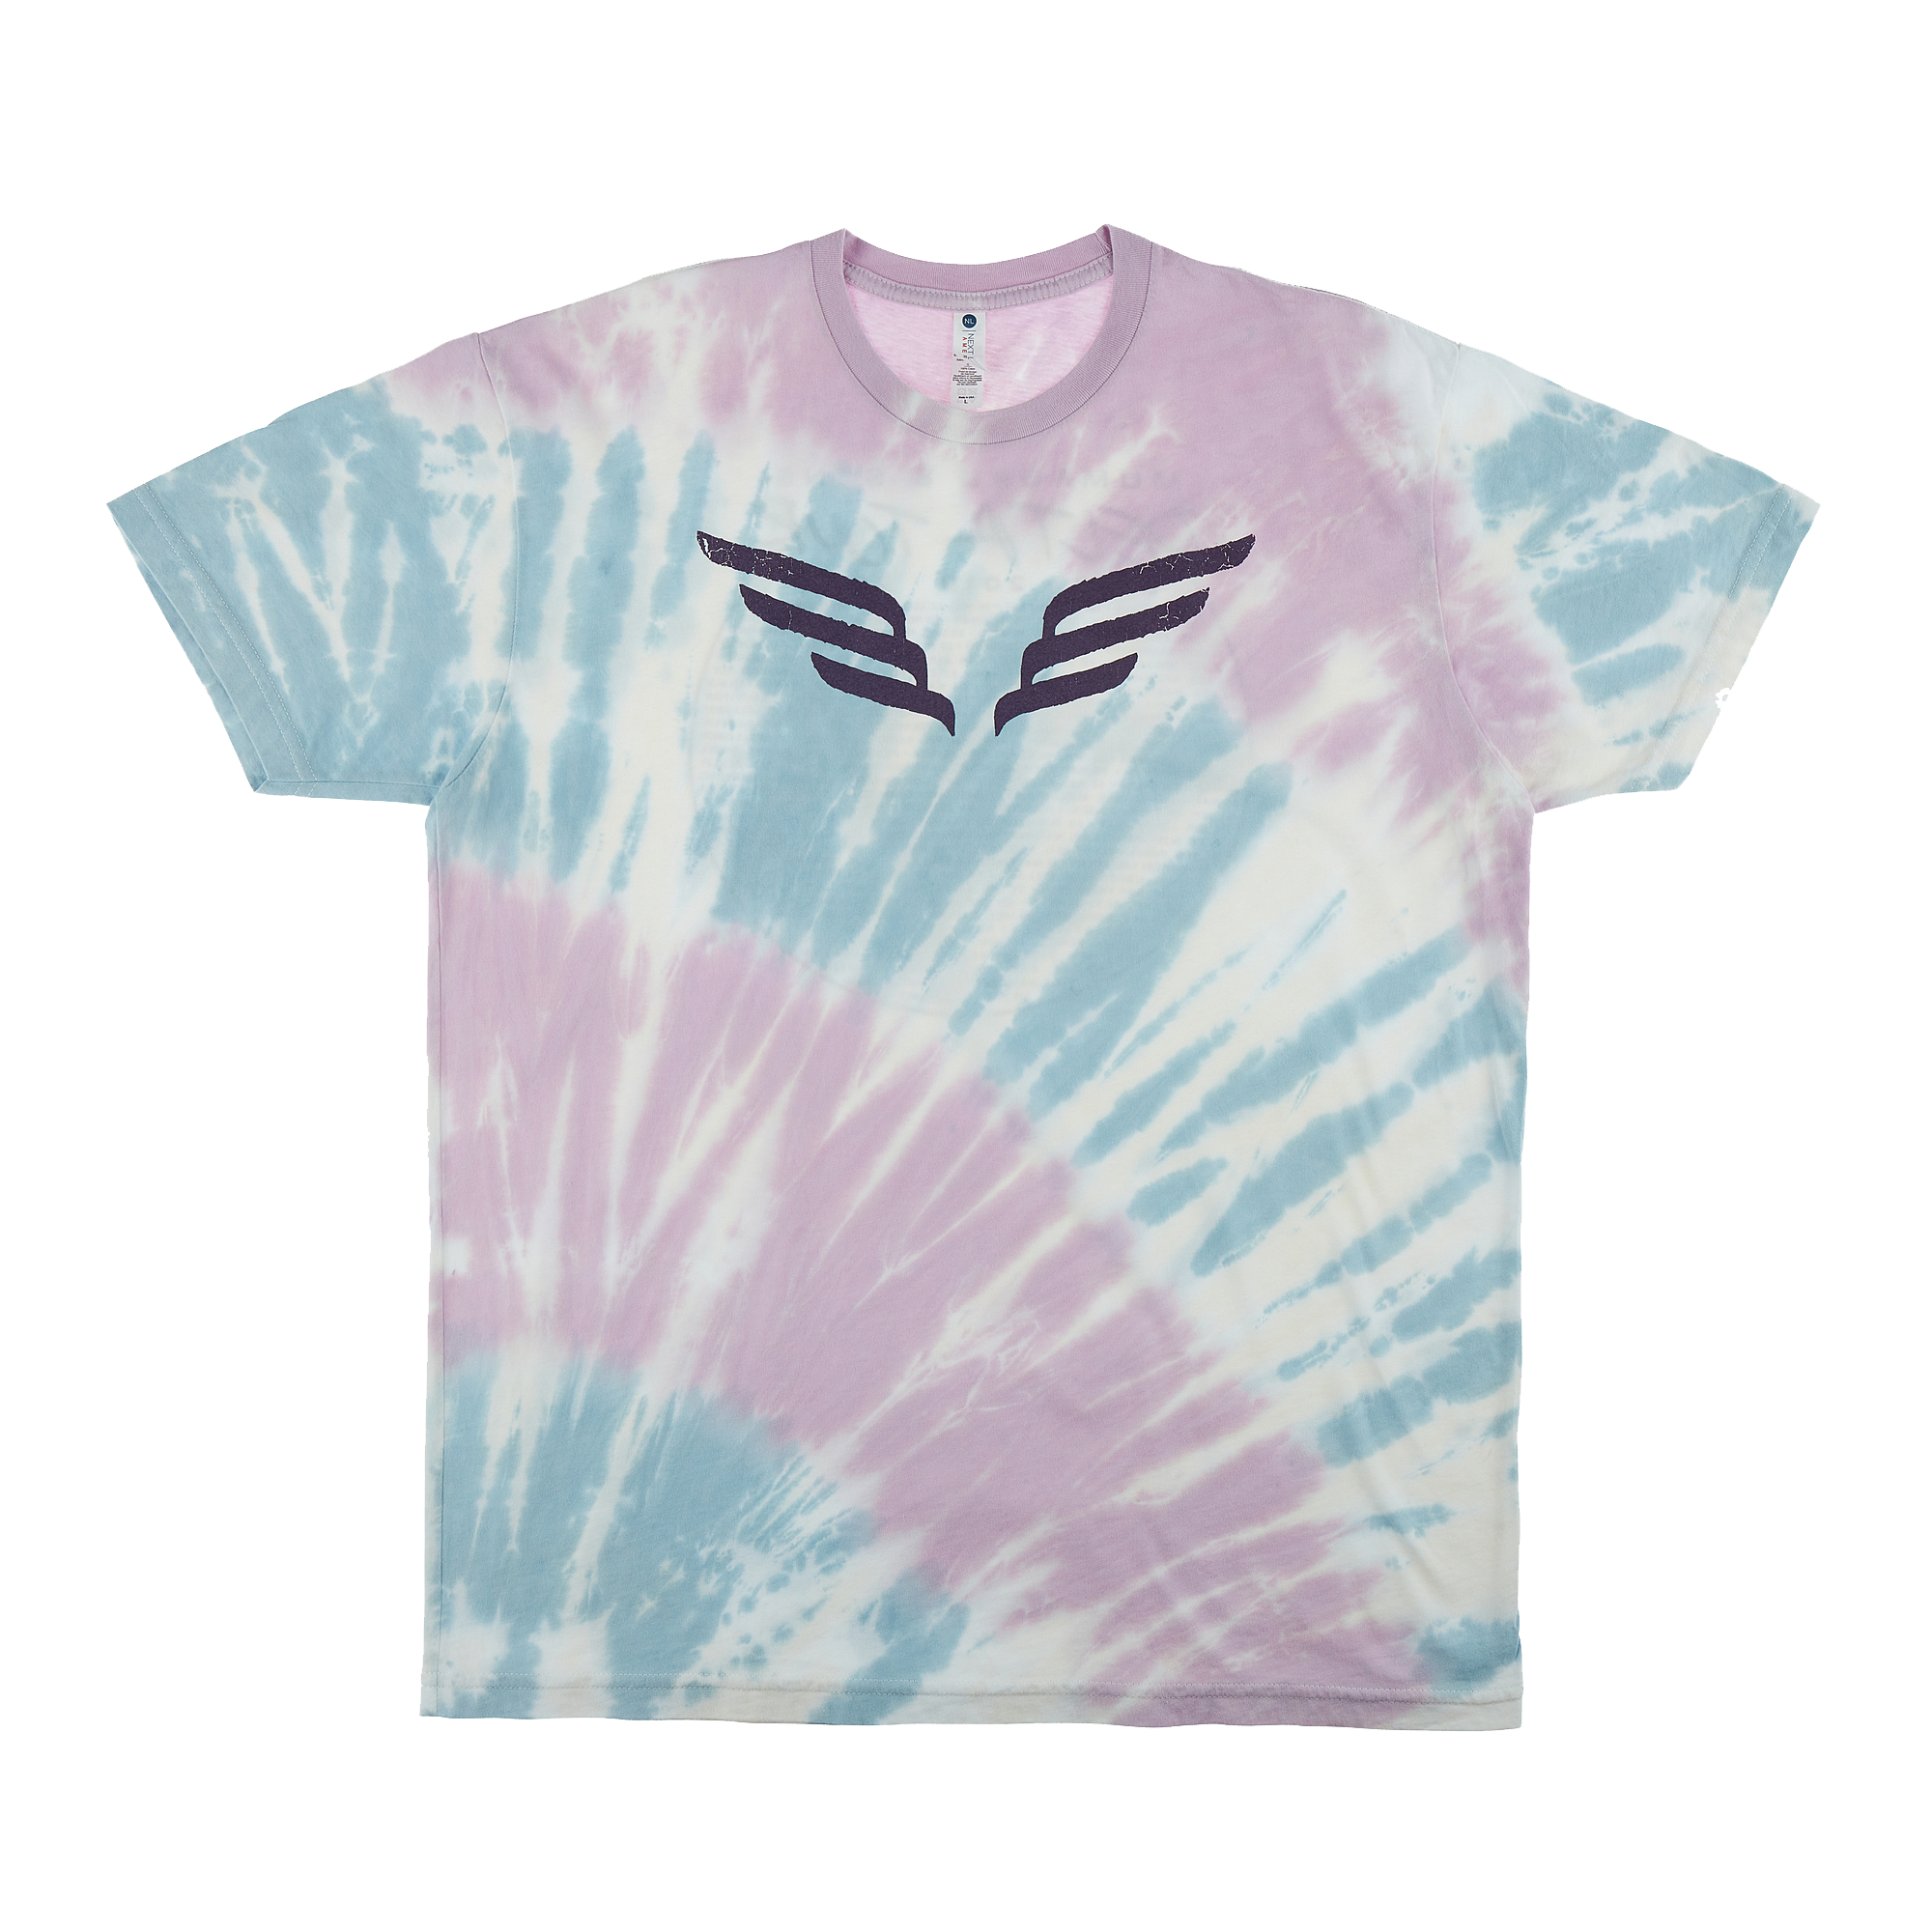 Mumford & Sons  - Pink & Blue Tie Dye Delta Tour Print T-shirt 